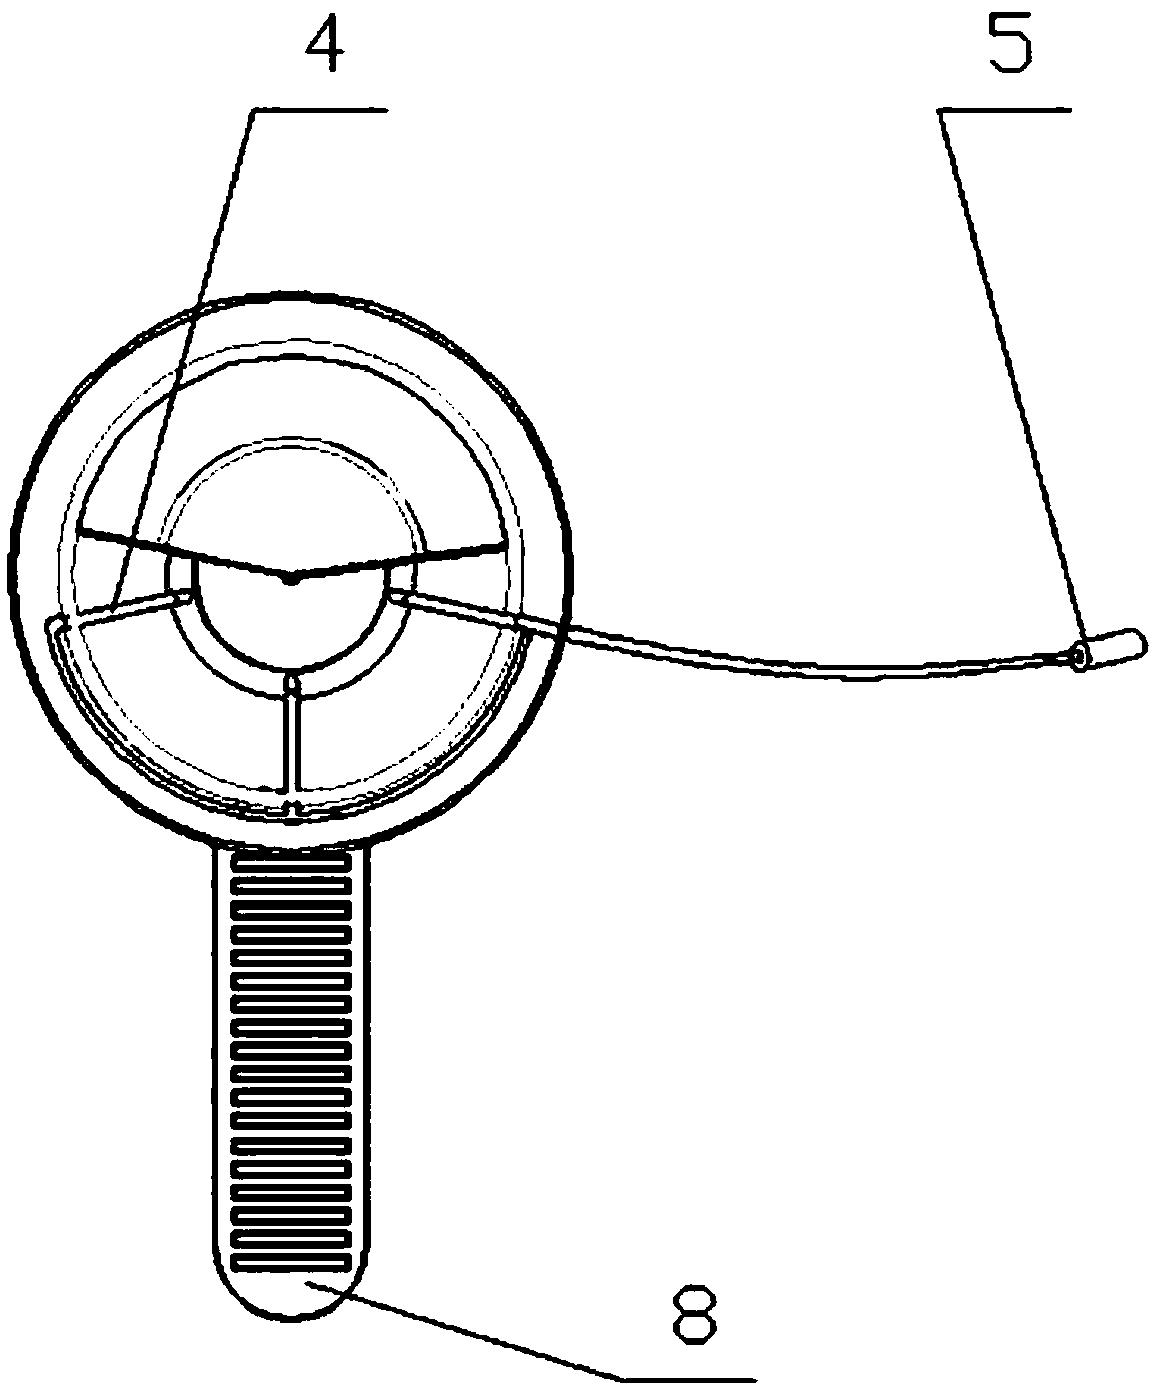 an anoscope